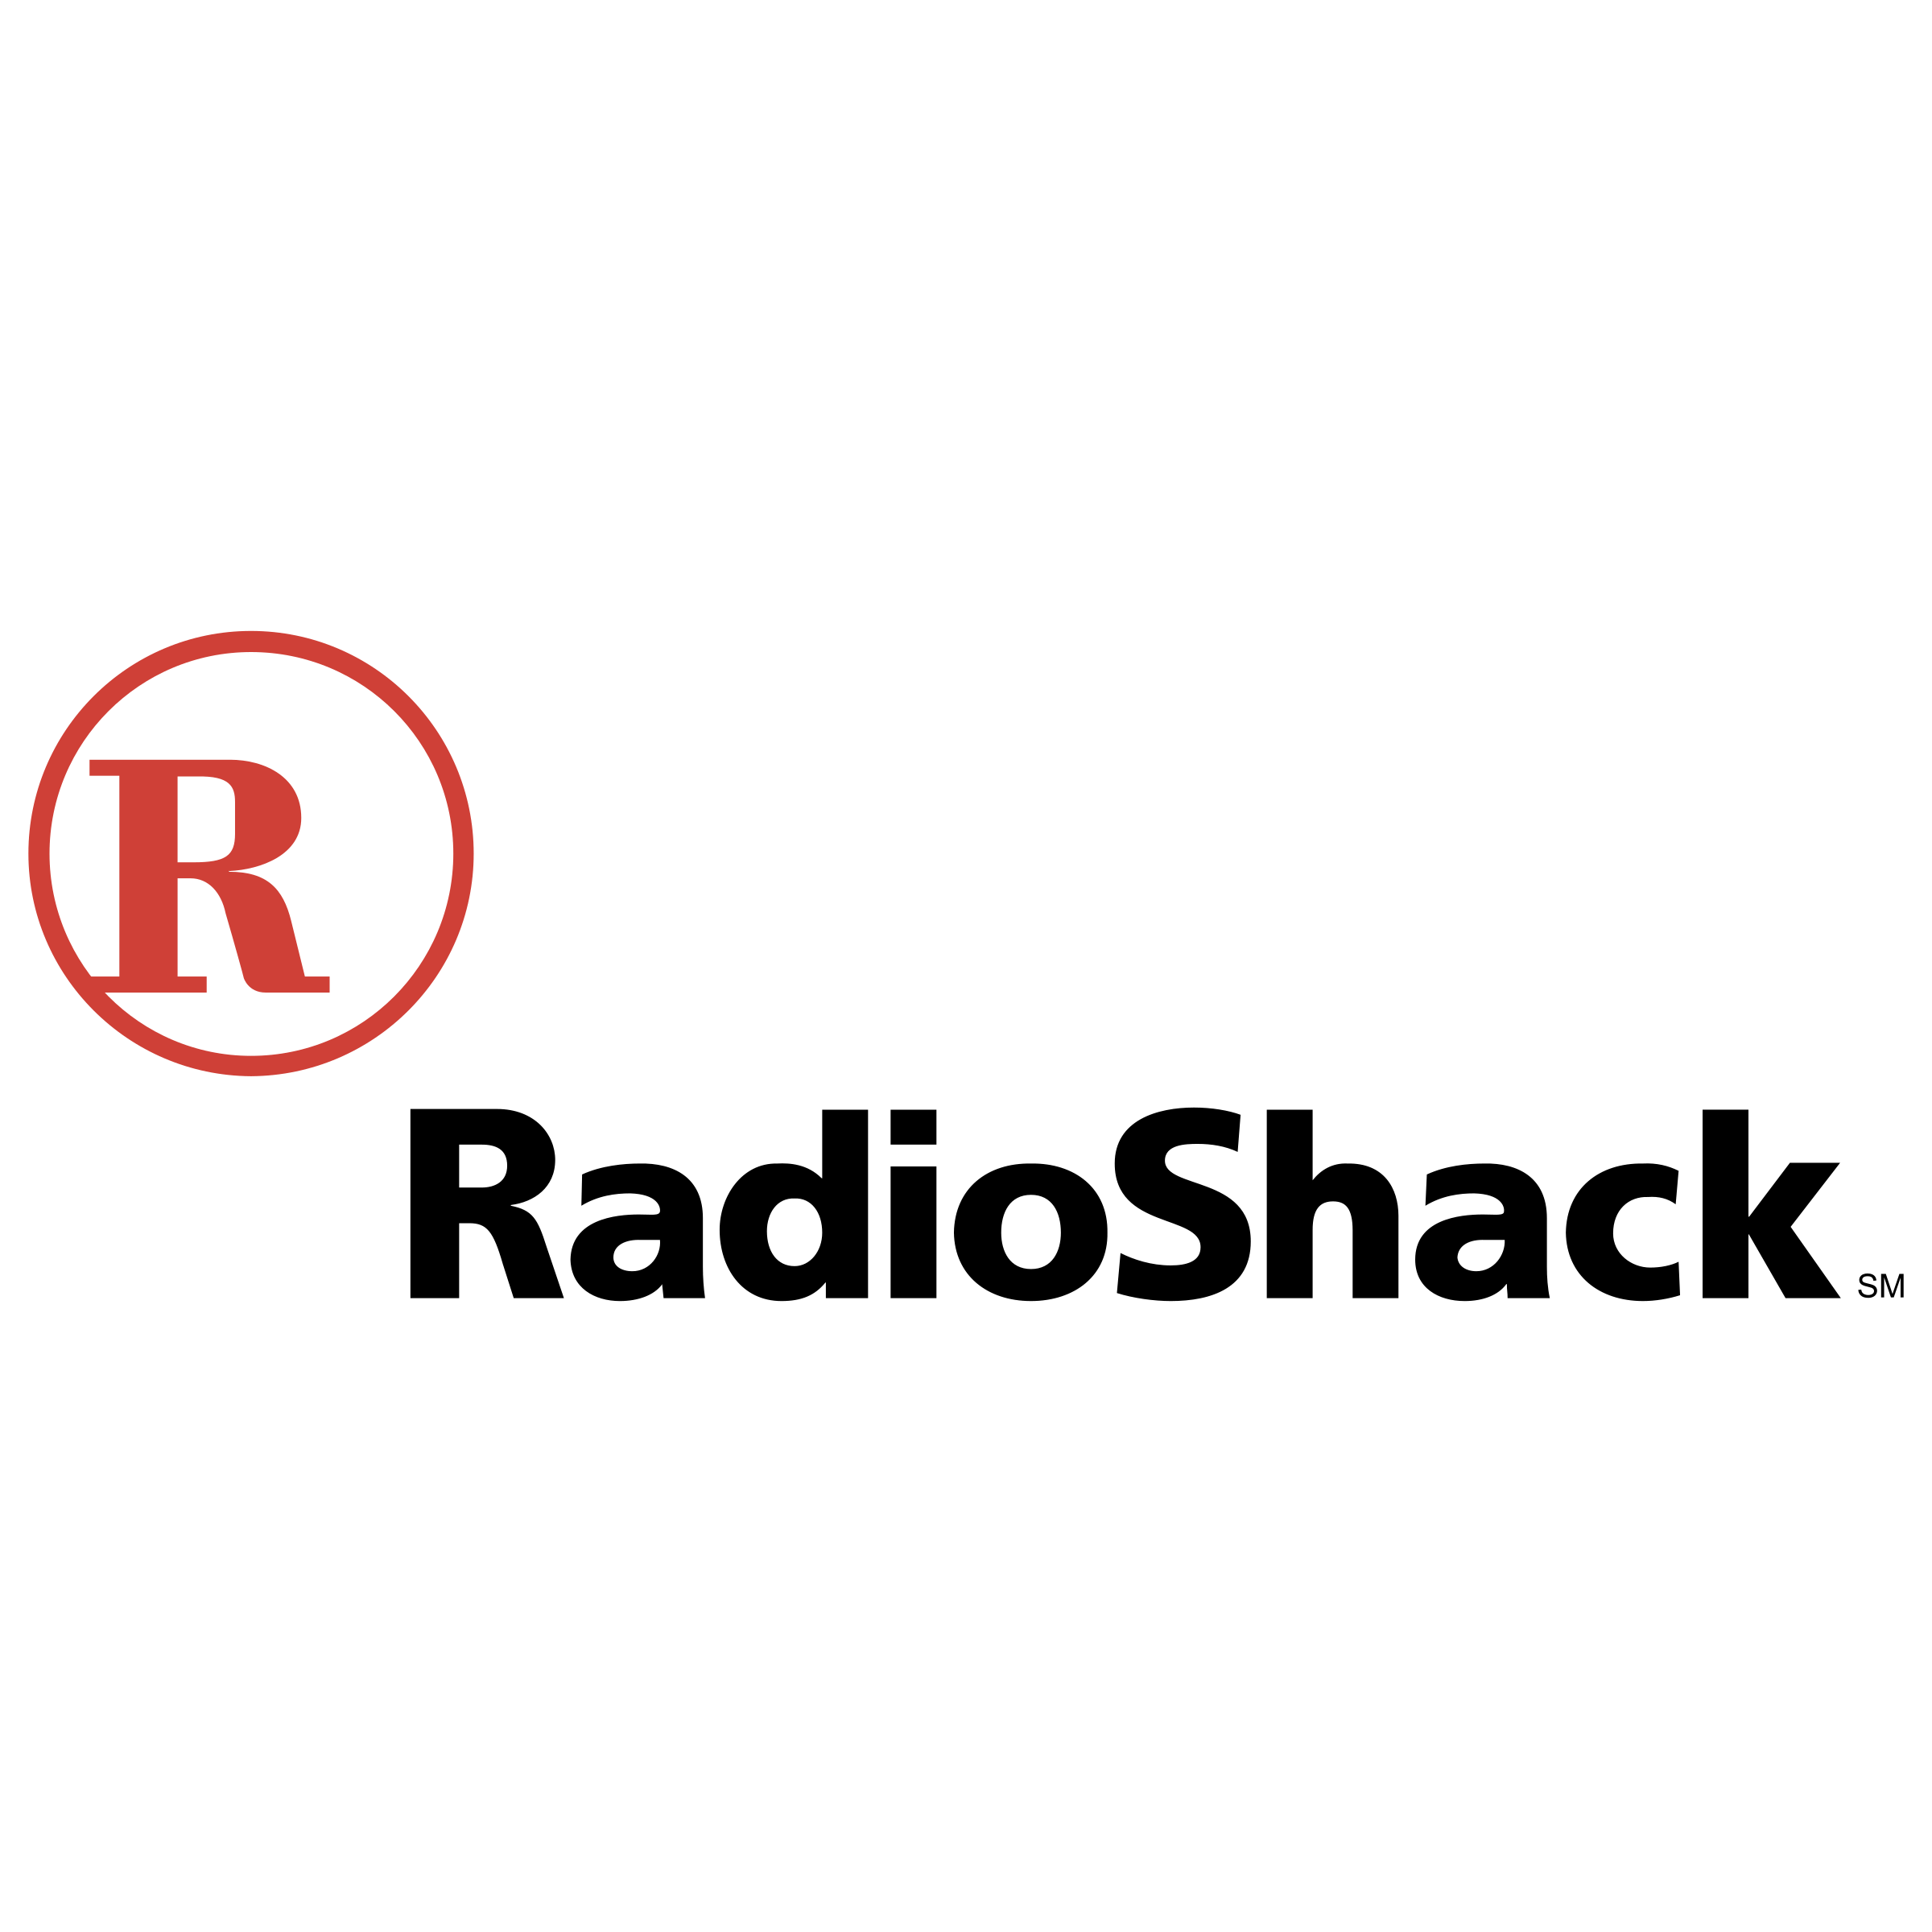 Radioshack Logo - Radio Shack Logo PNG Transparent & SVG Vector - Freebie Supply